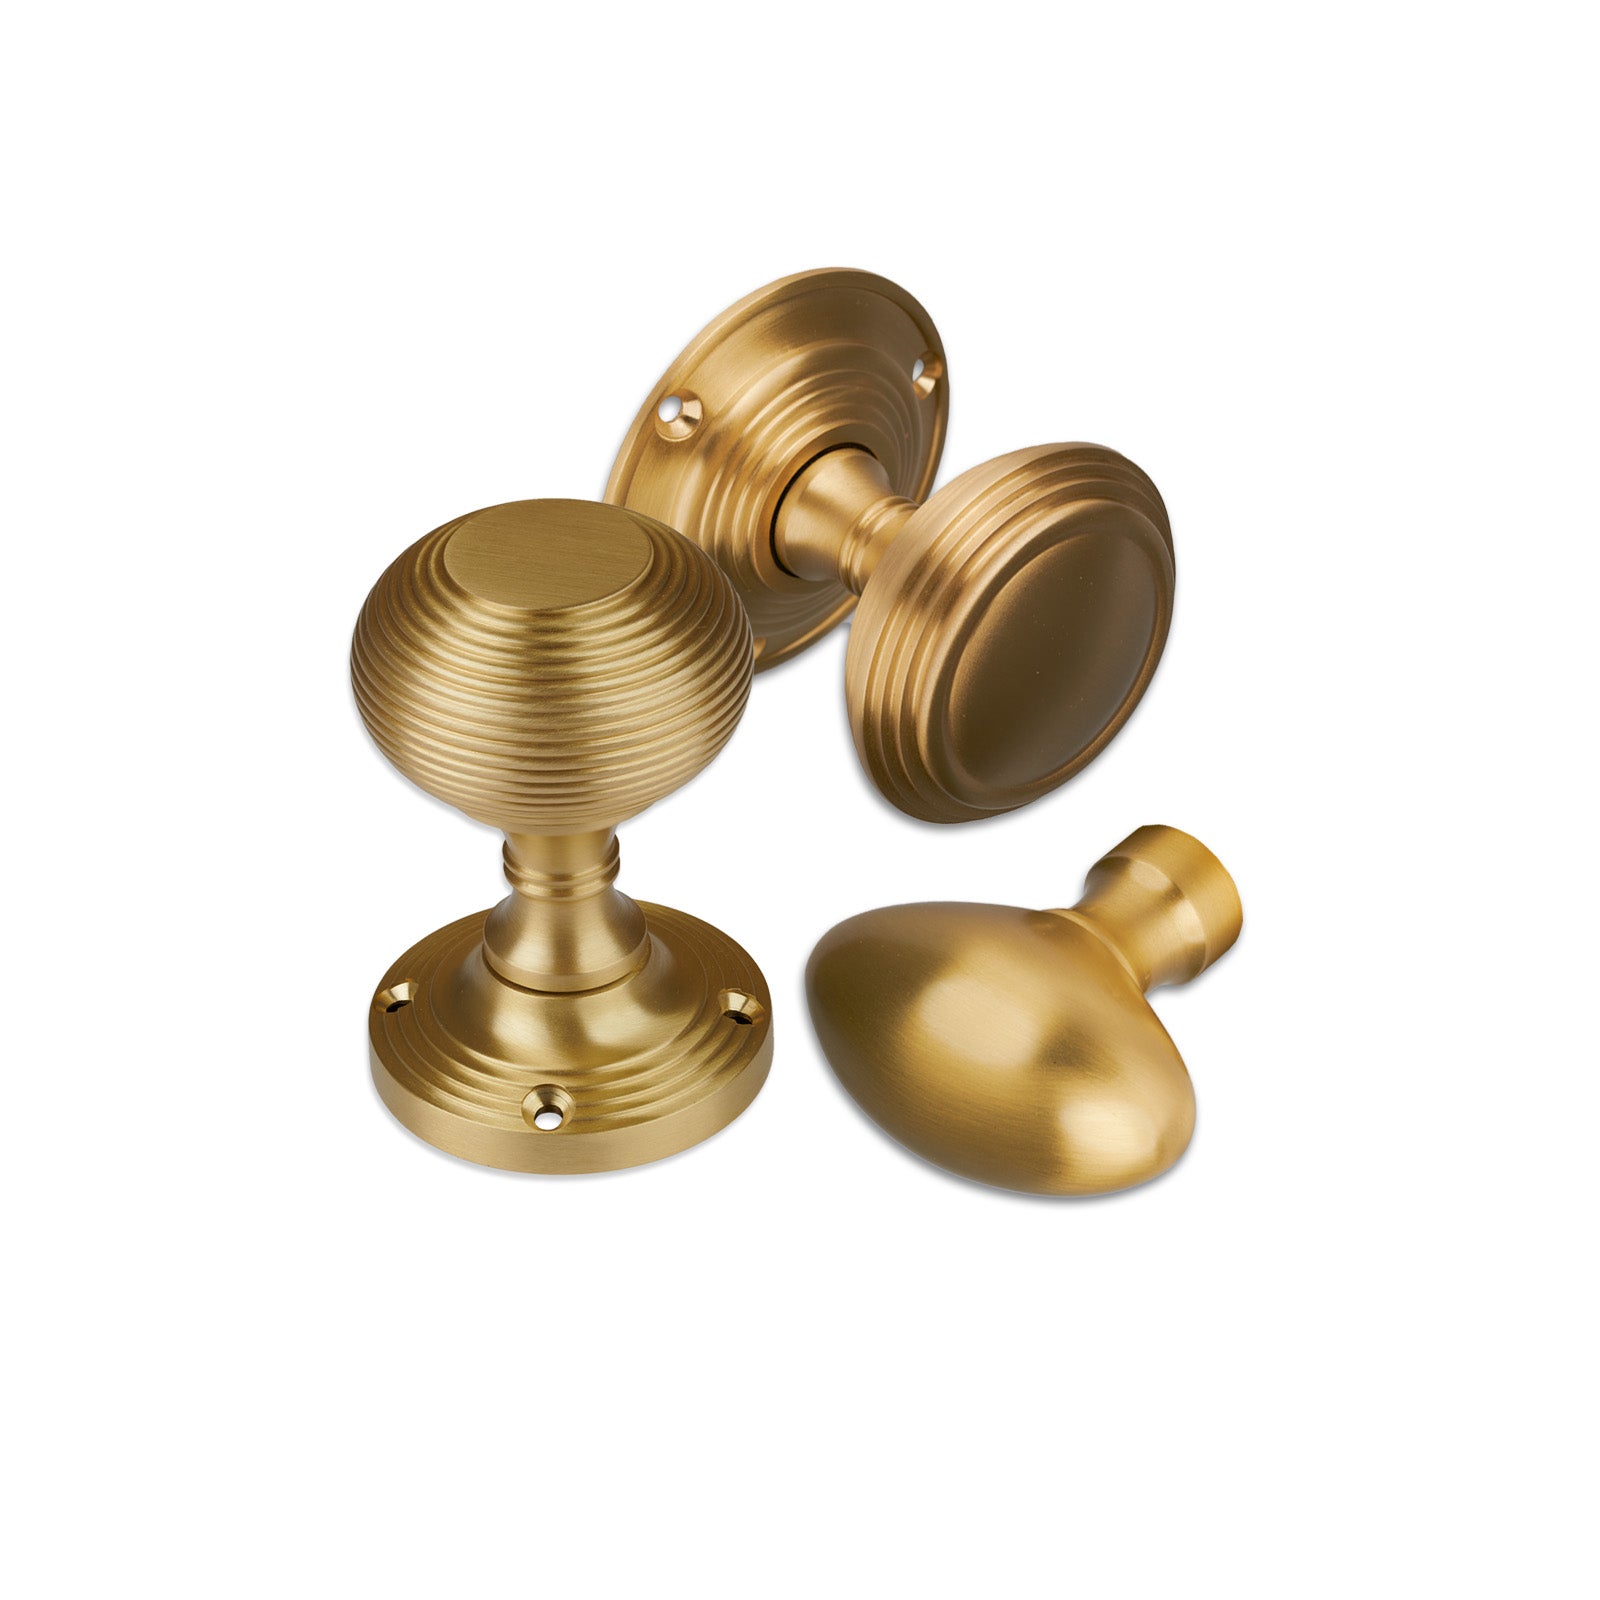 Harrogate Round Mushroom Mortice Door Knob in Polished Brass